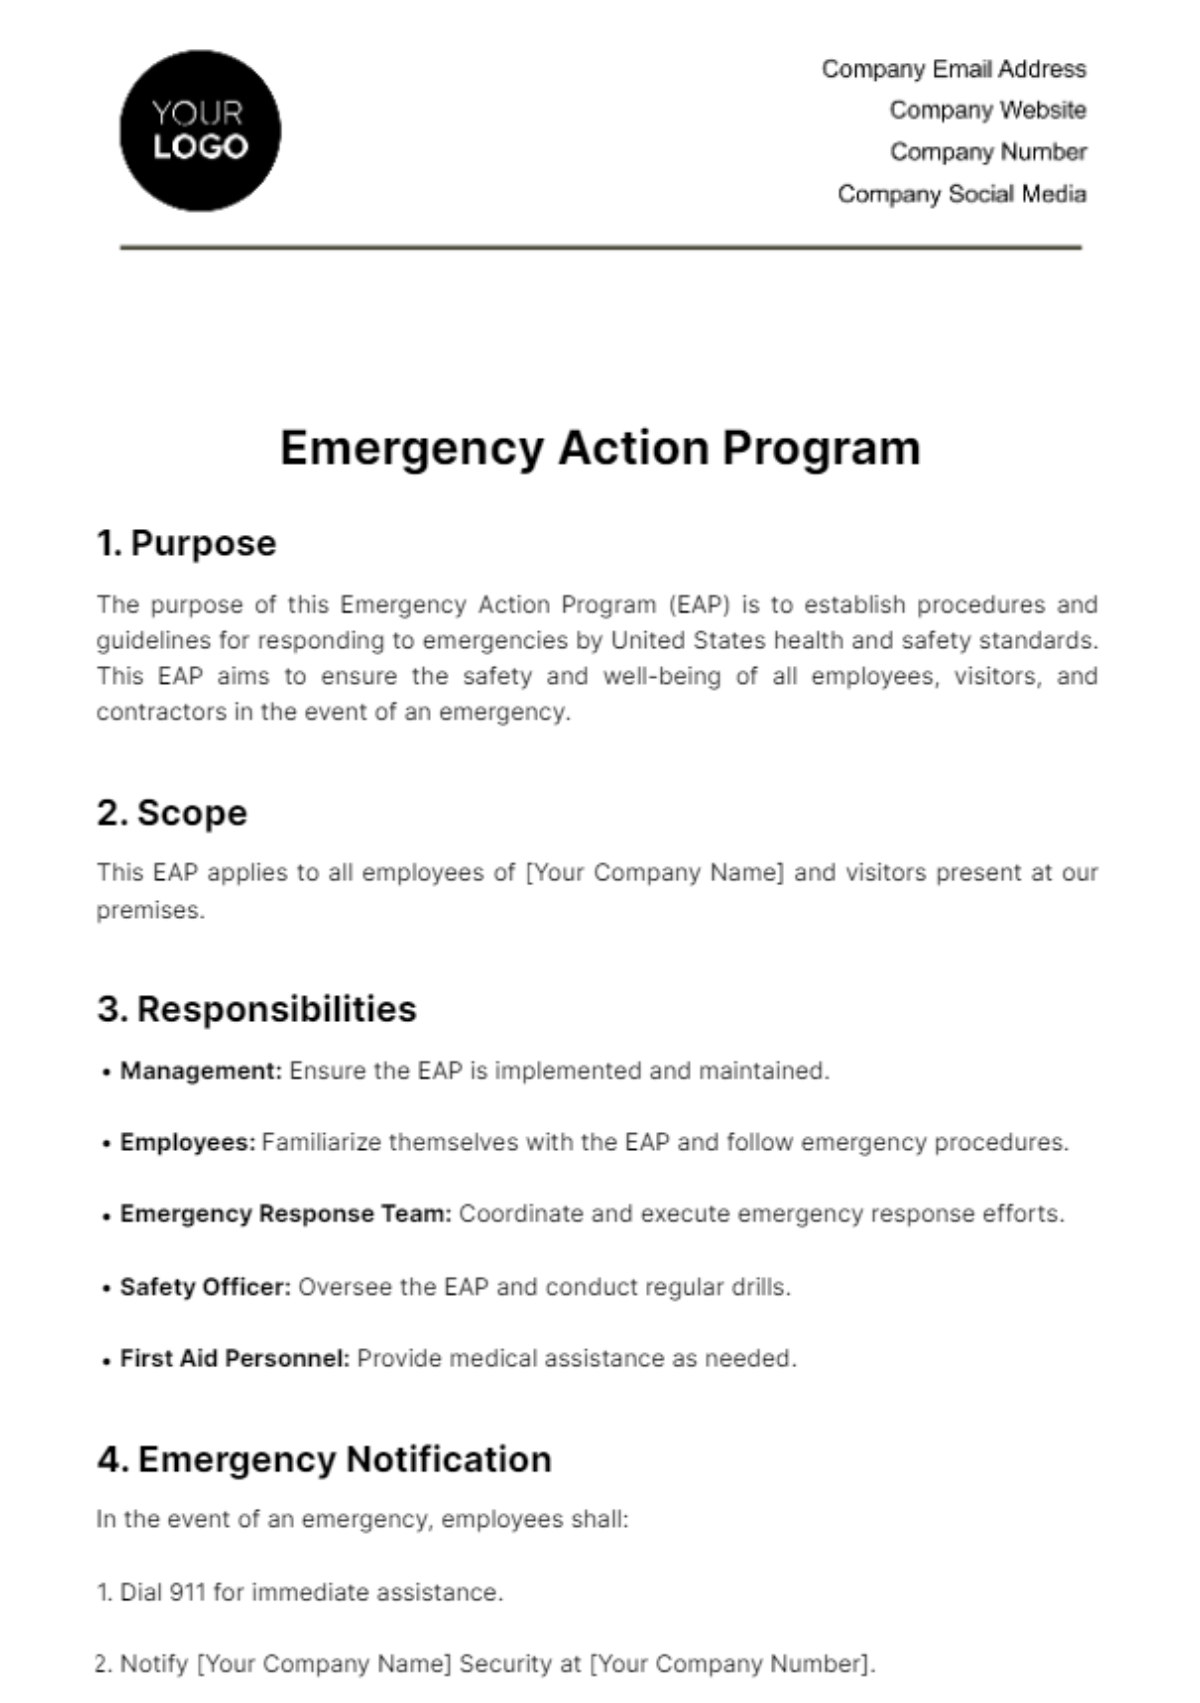 Emergency Action Program Template